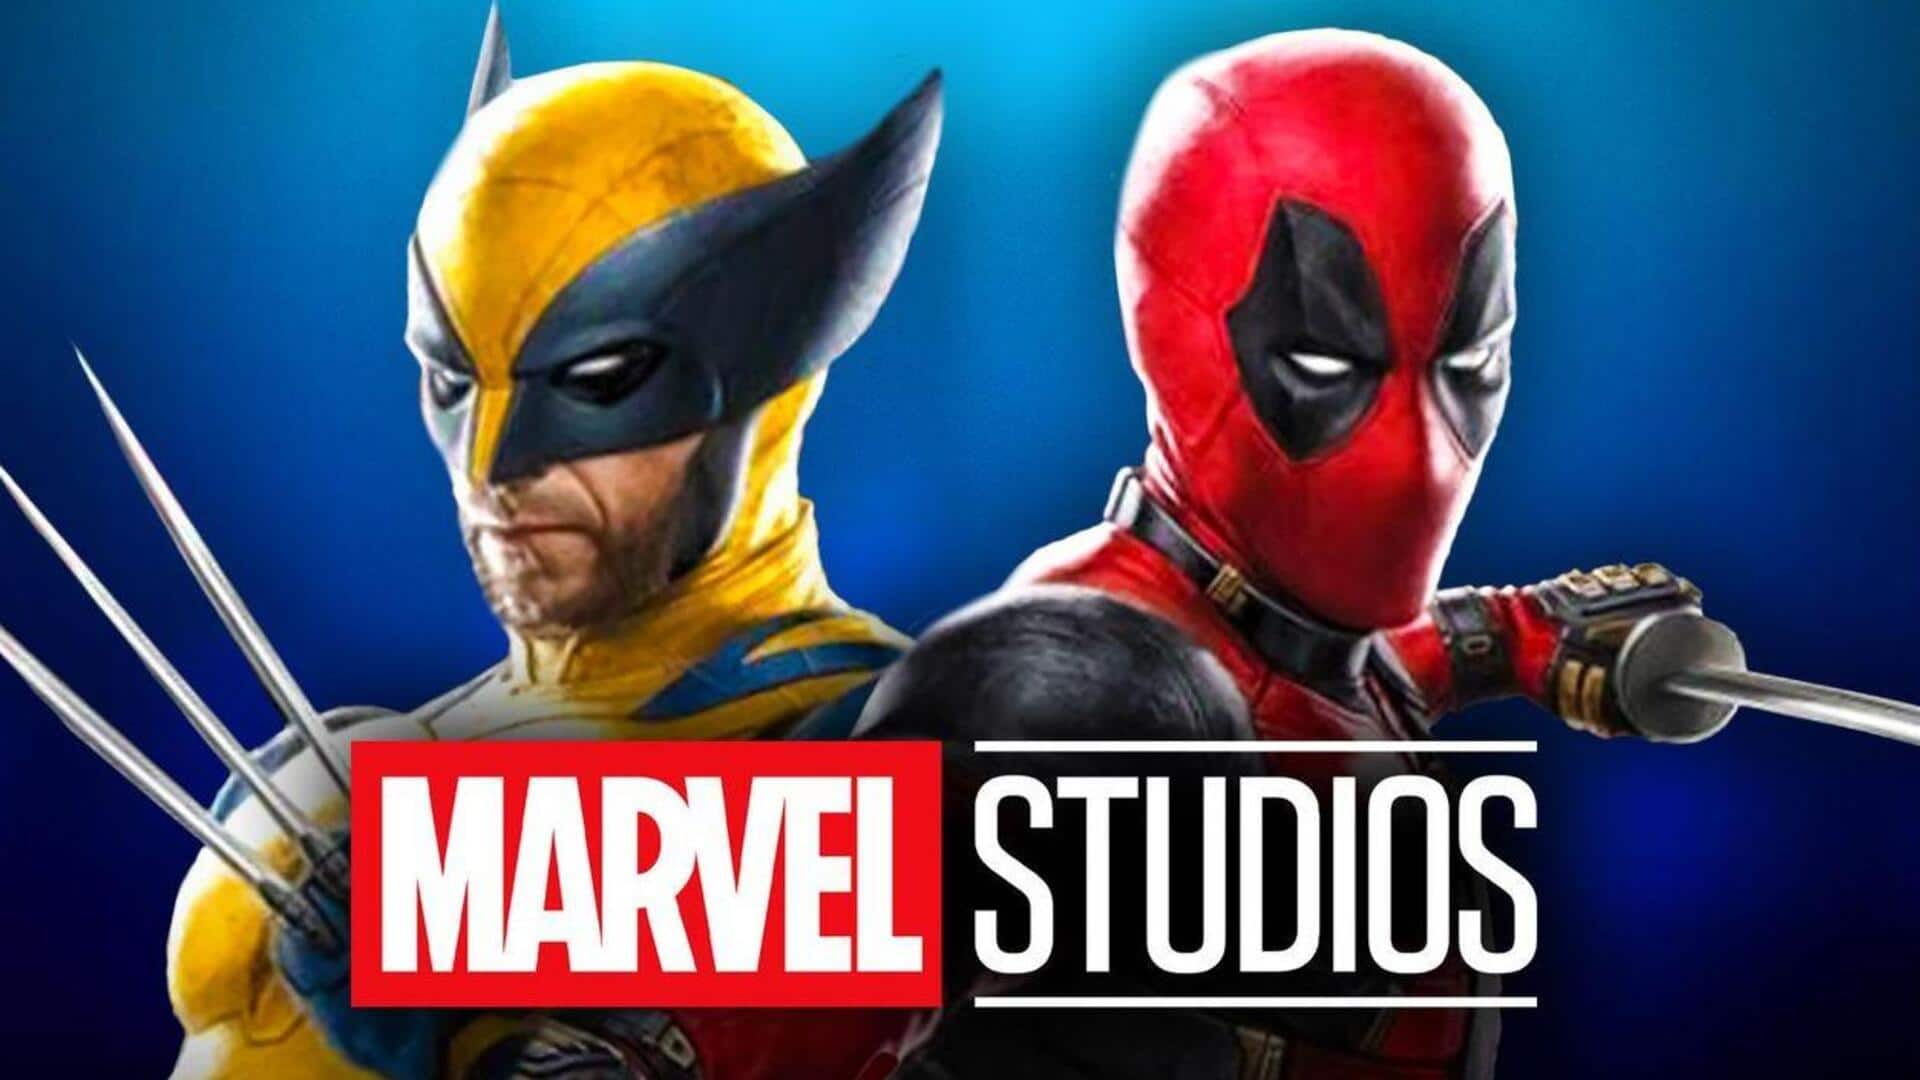 Deadpool Wolverine:డెడ్ పూల్ అండ్ వాల్వరిన్ టీజర్ కు మంచి స్పందన...జూన్ 26న విడుదలకు సన్నాహాలు